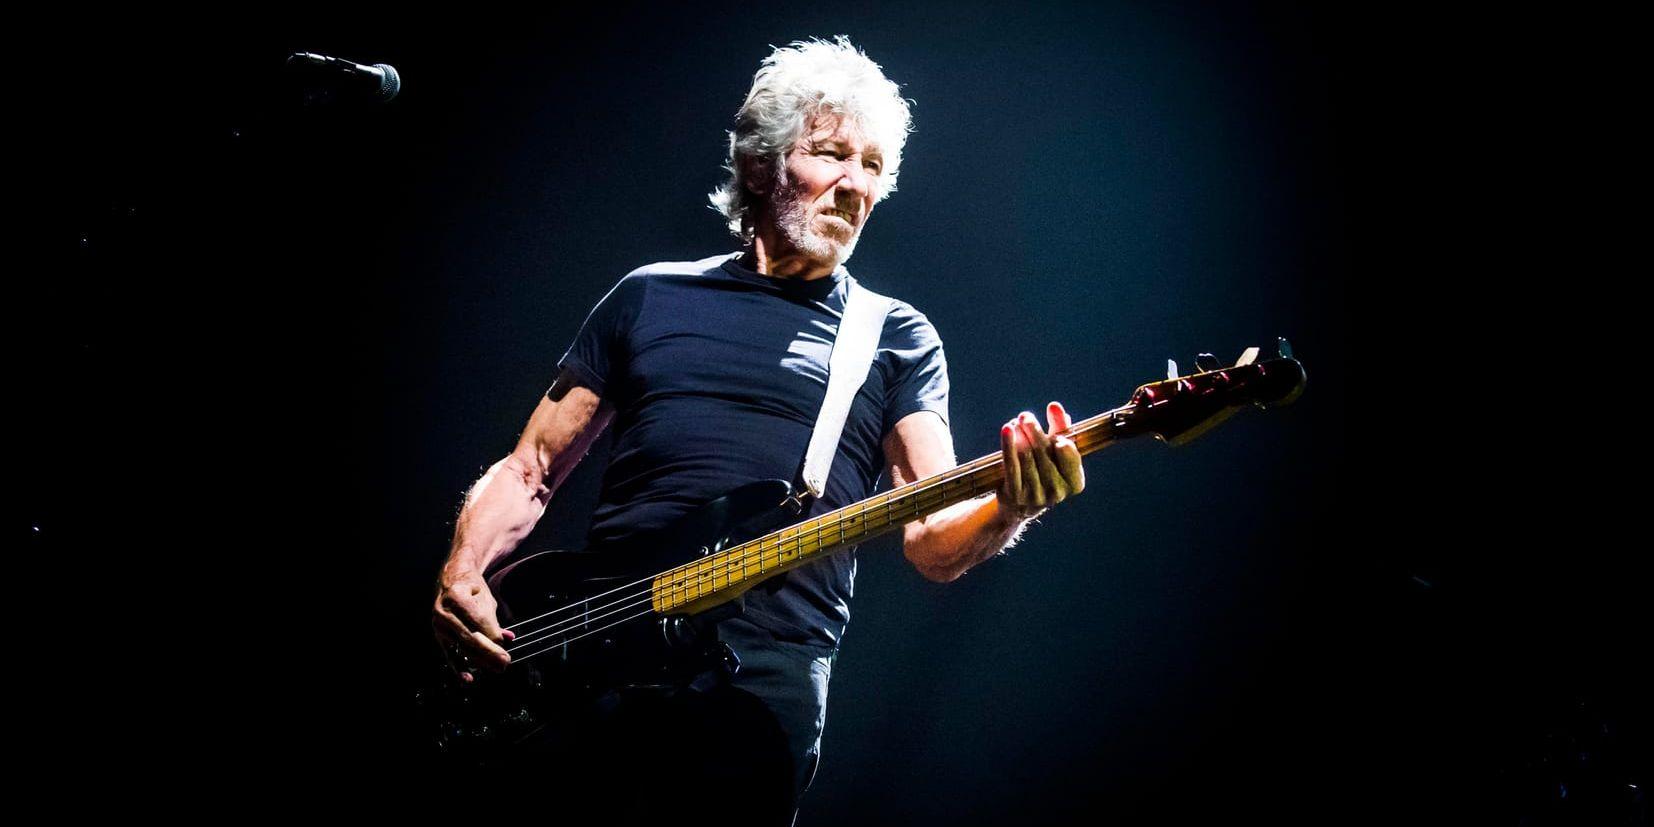 I lördags spelade Roger Waters på Friends Arena.